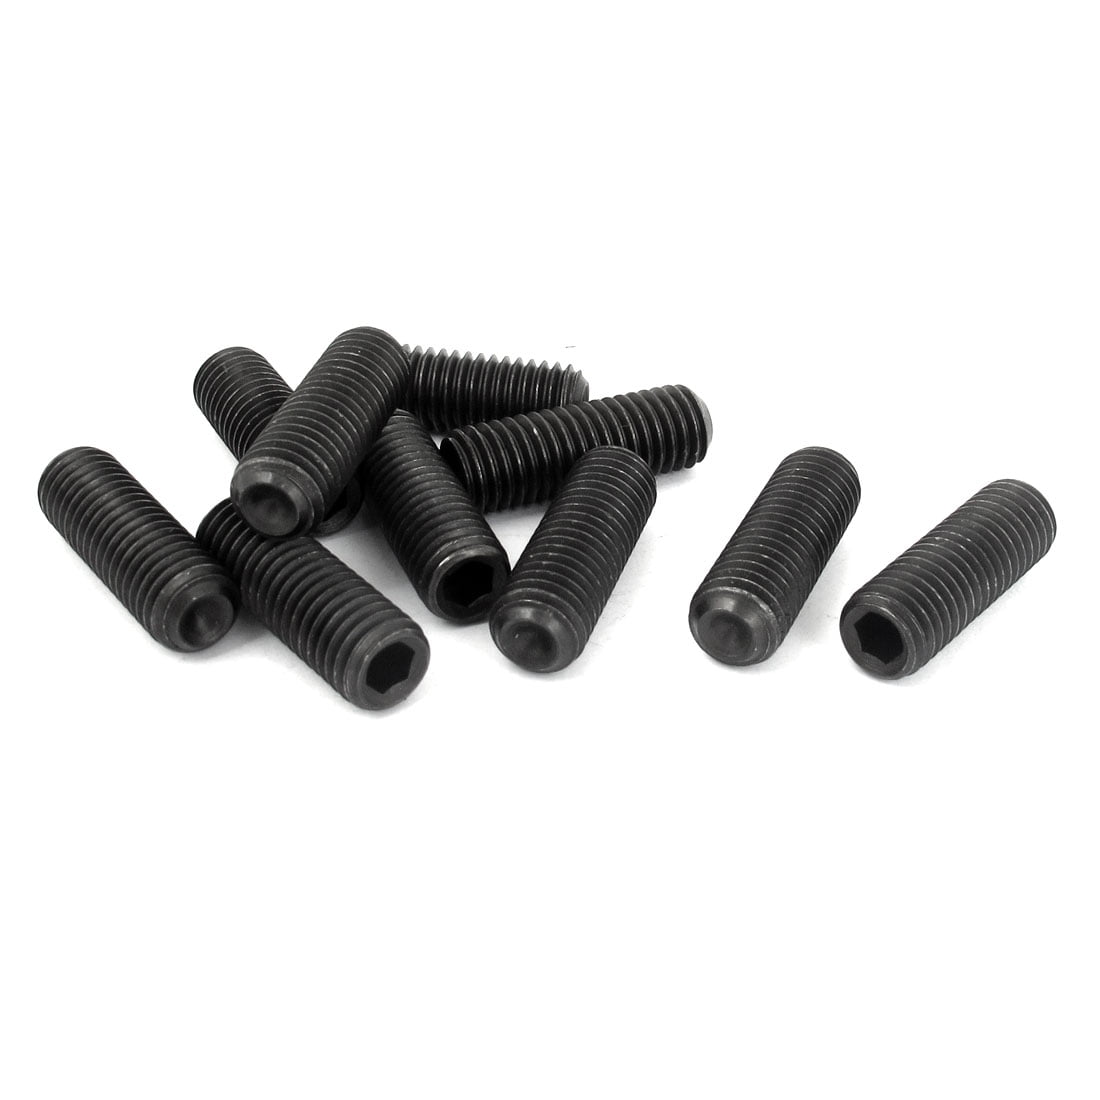 M10 1.5 Black 12.9 Alloy Steel Grub Screws Hex Socket Set Screws with Flat Point